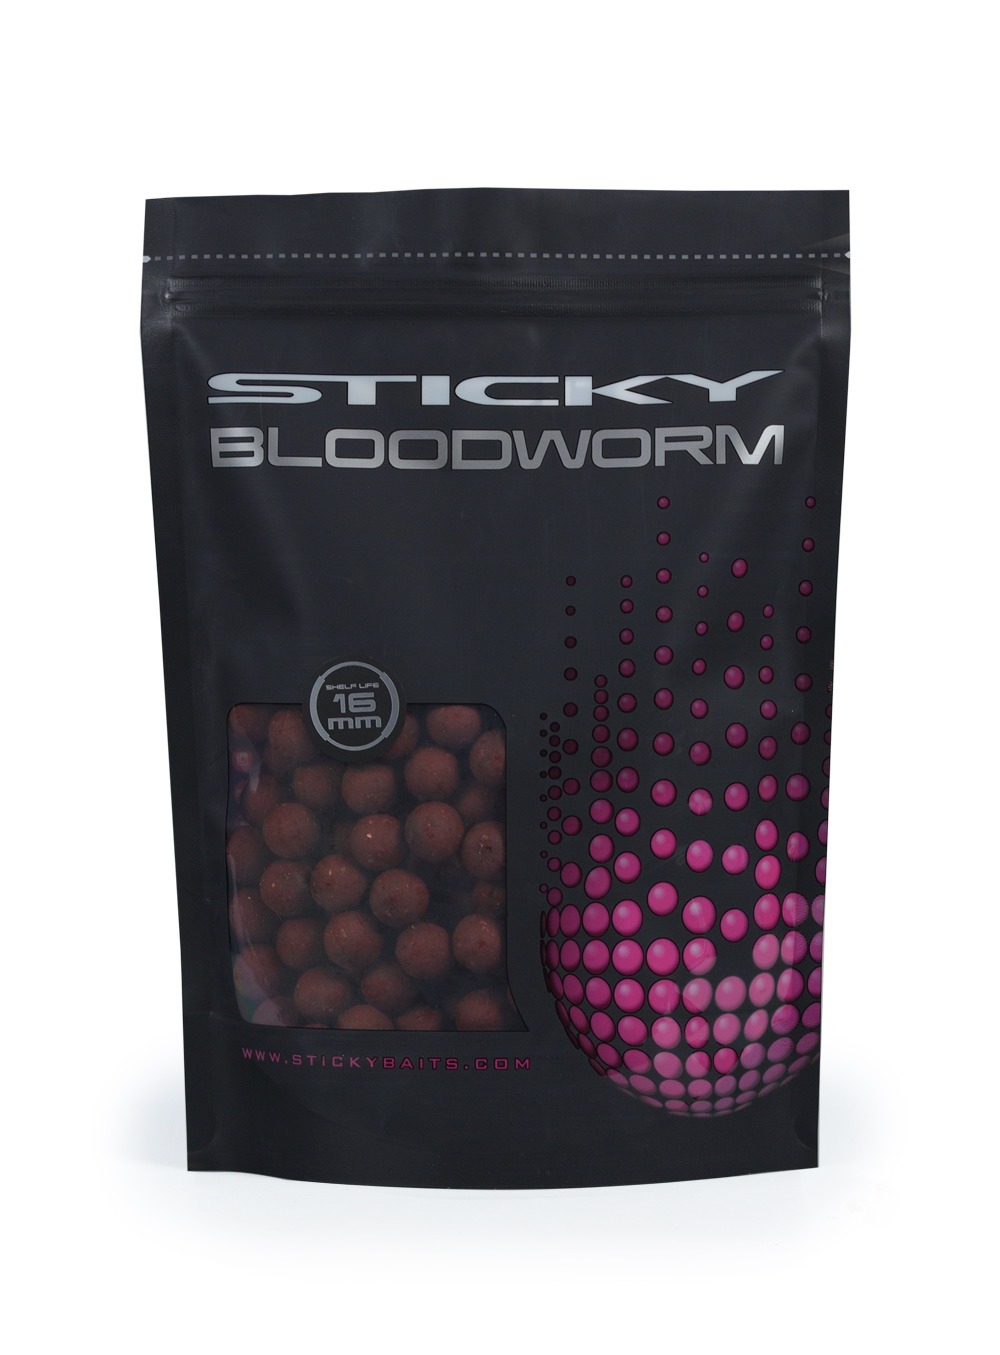 Sticky Baits - Products - Bloodworm Shelf Life - Carp Fishing Bait